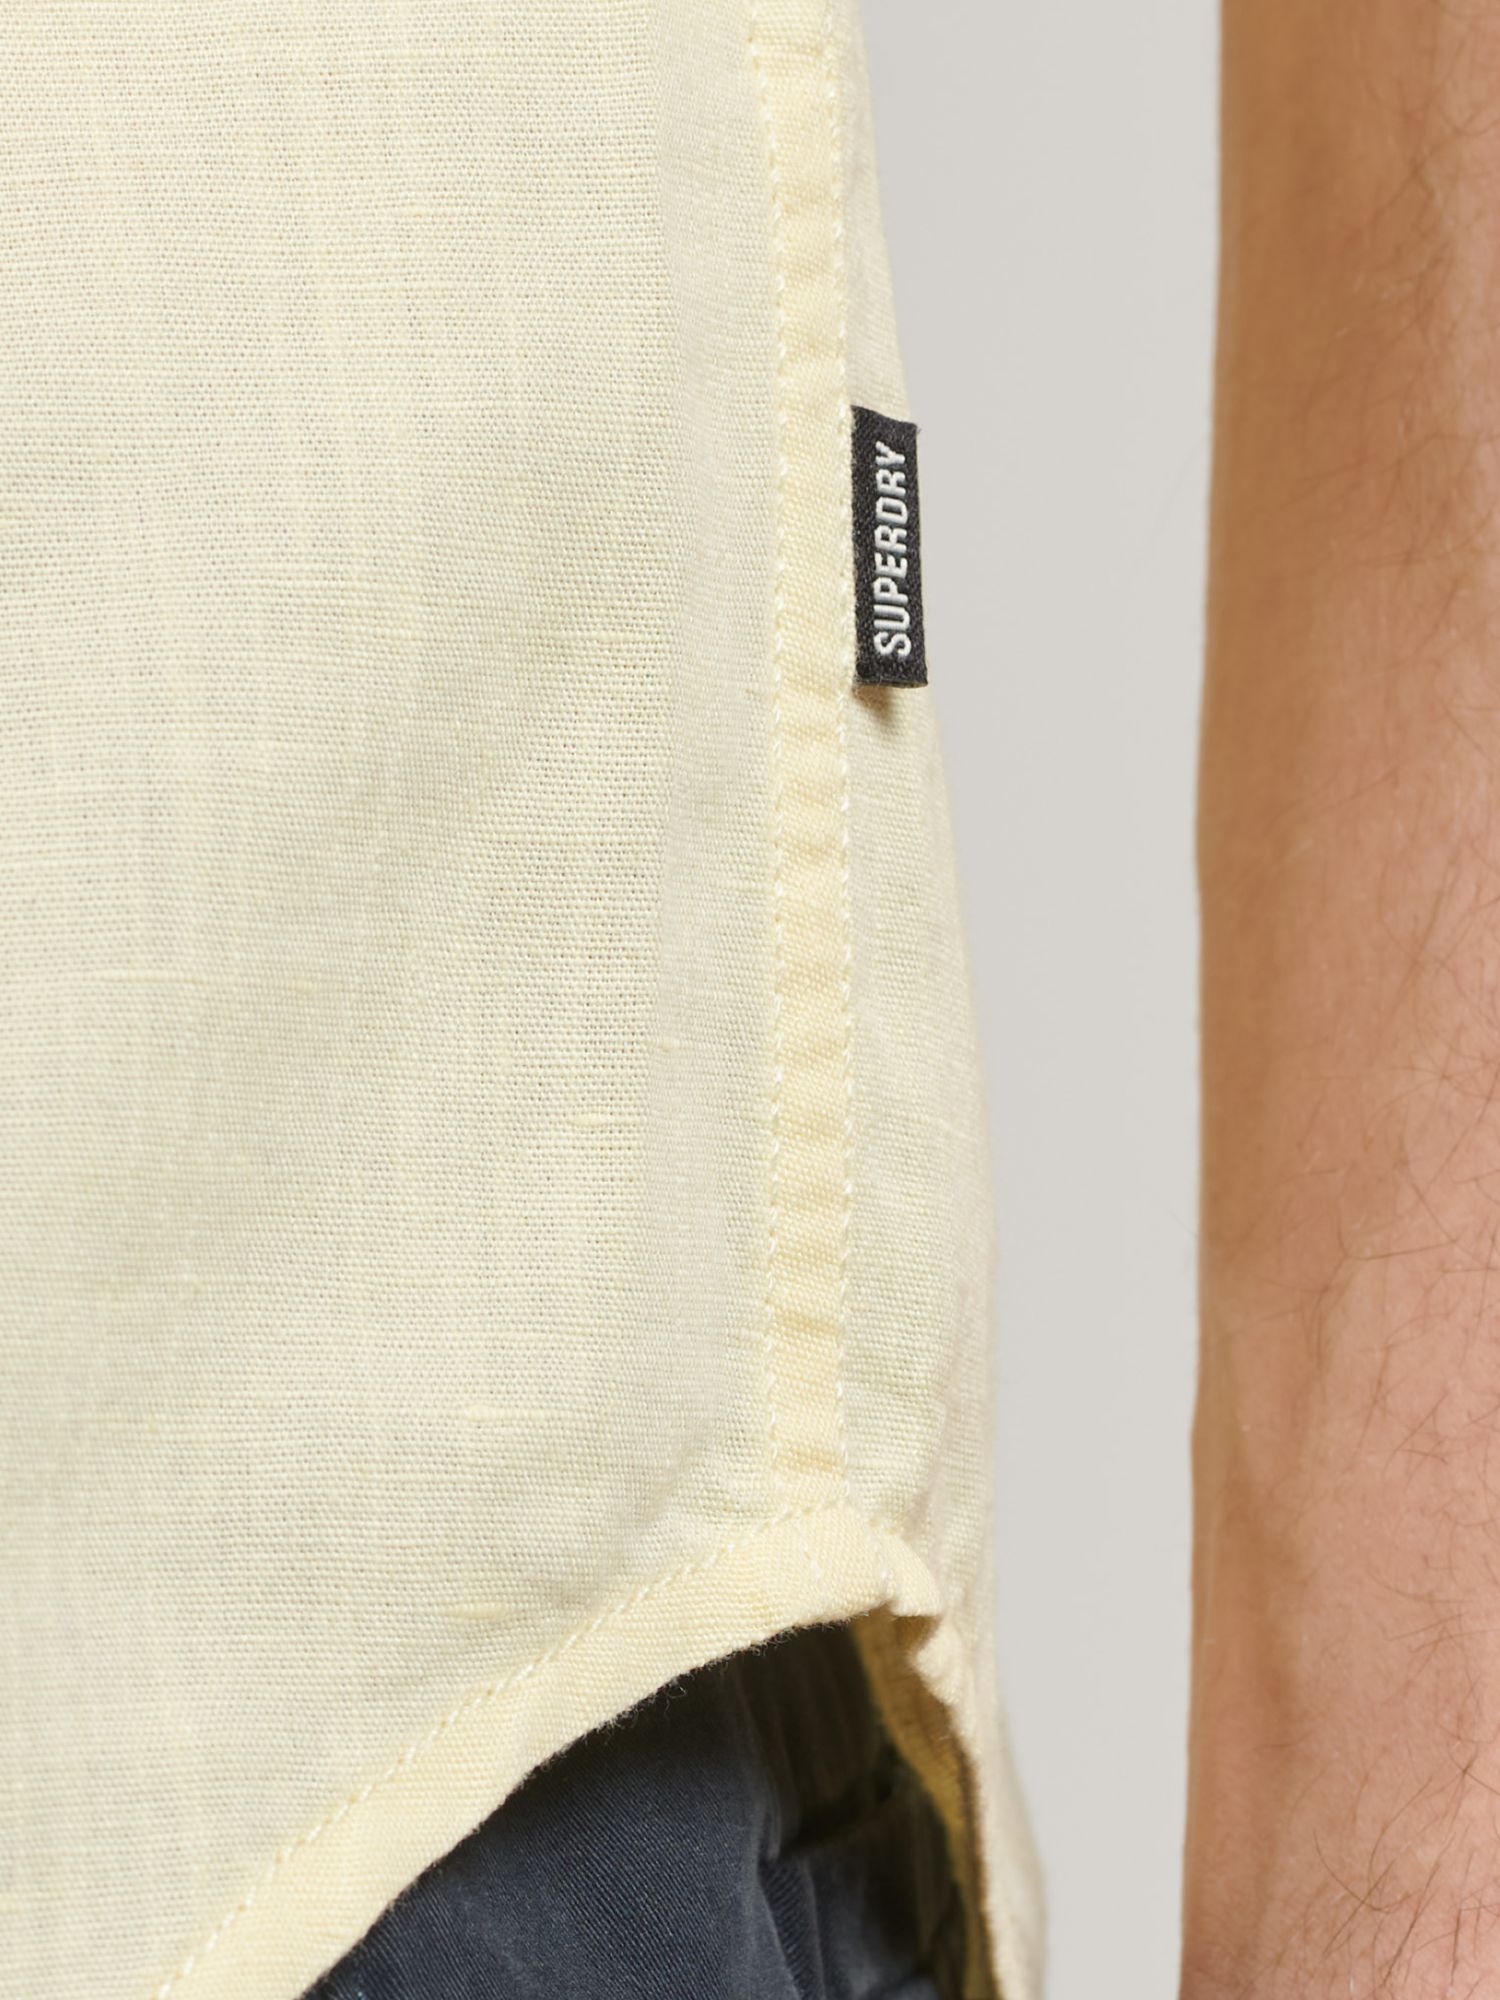 Buy Superdry Linen Blend Short Sleeve Shirt Online at johnlewis.com